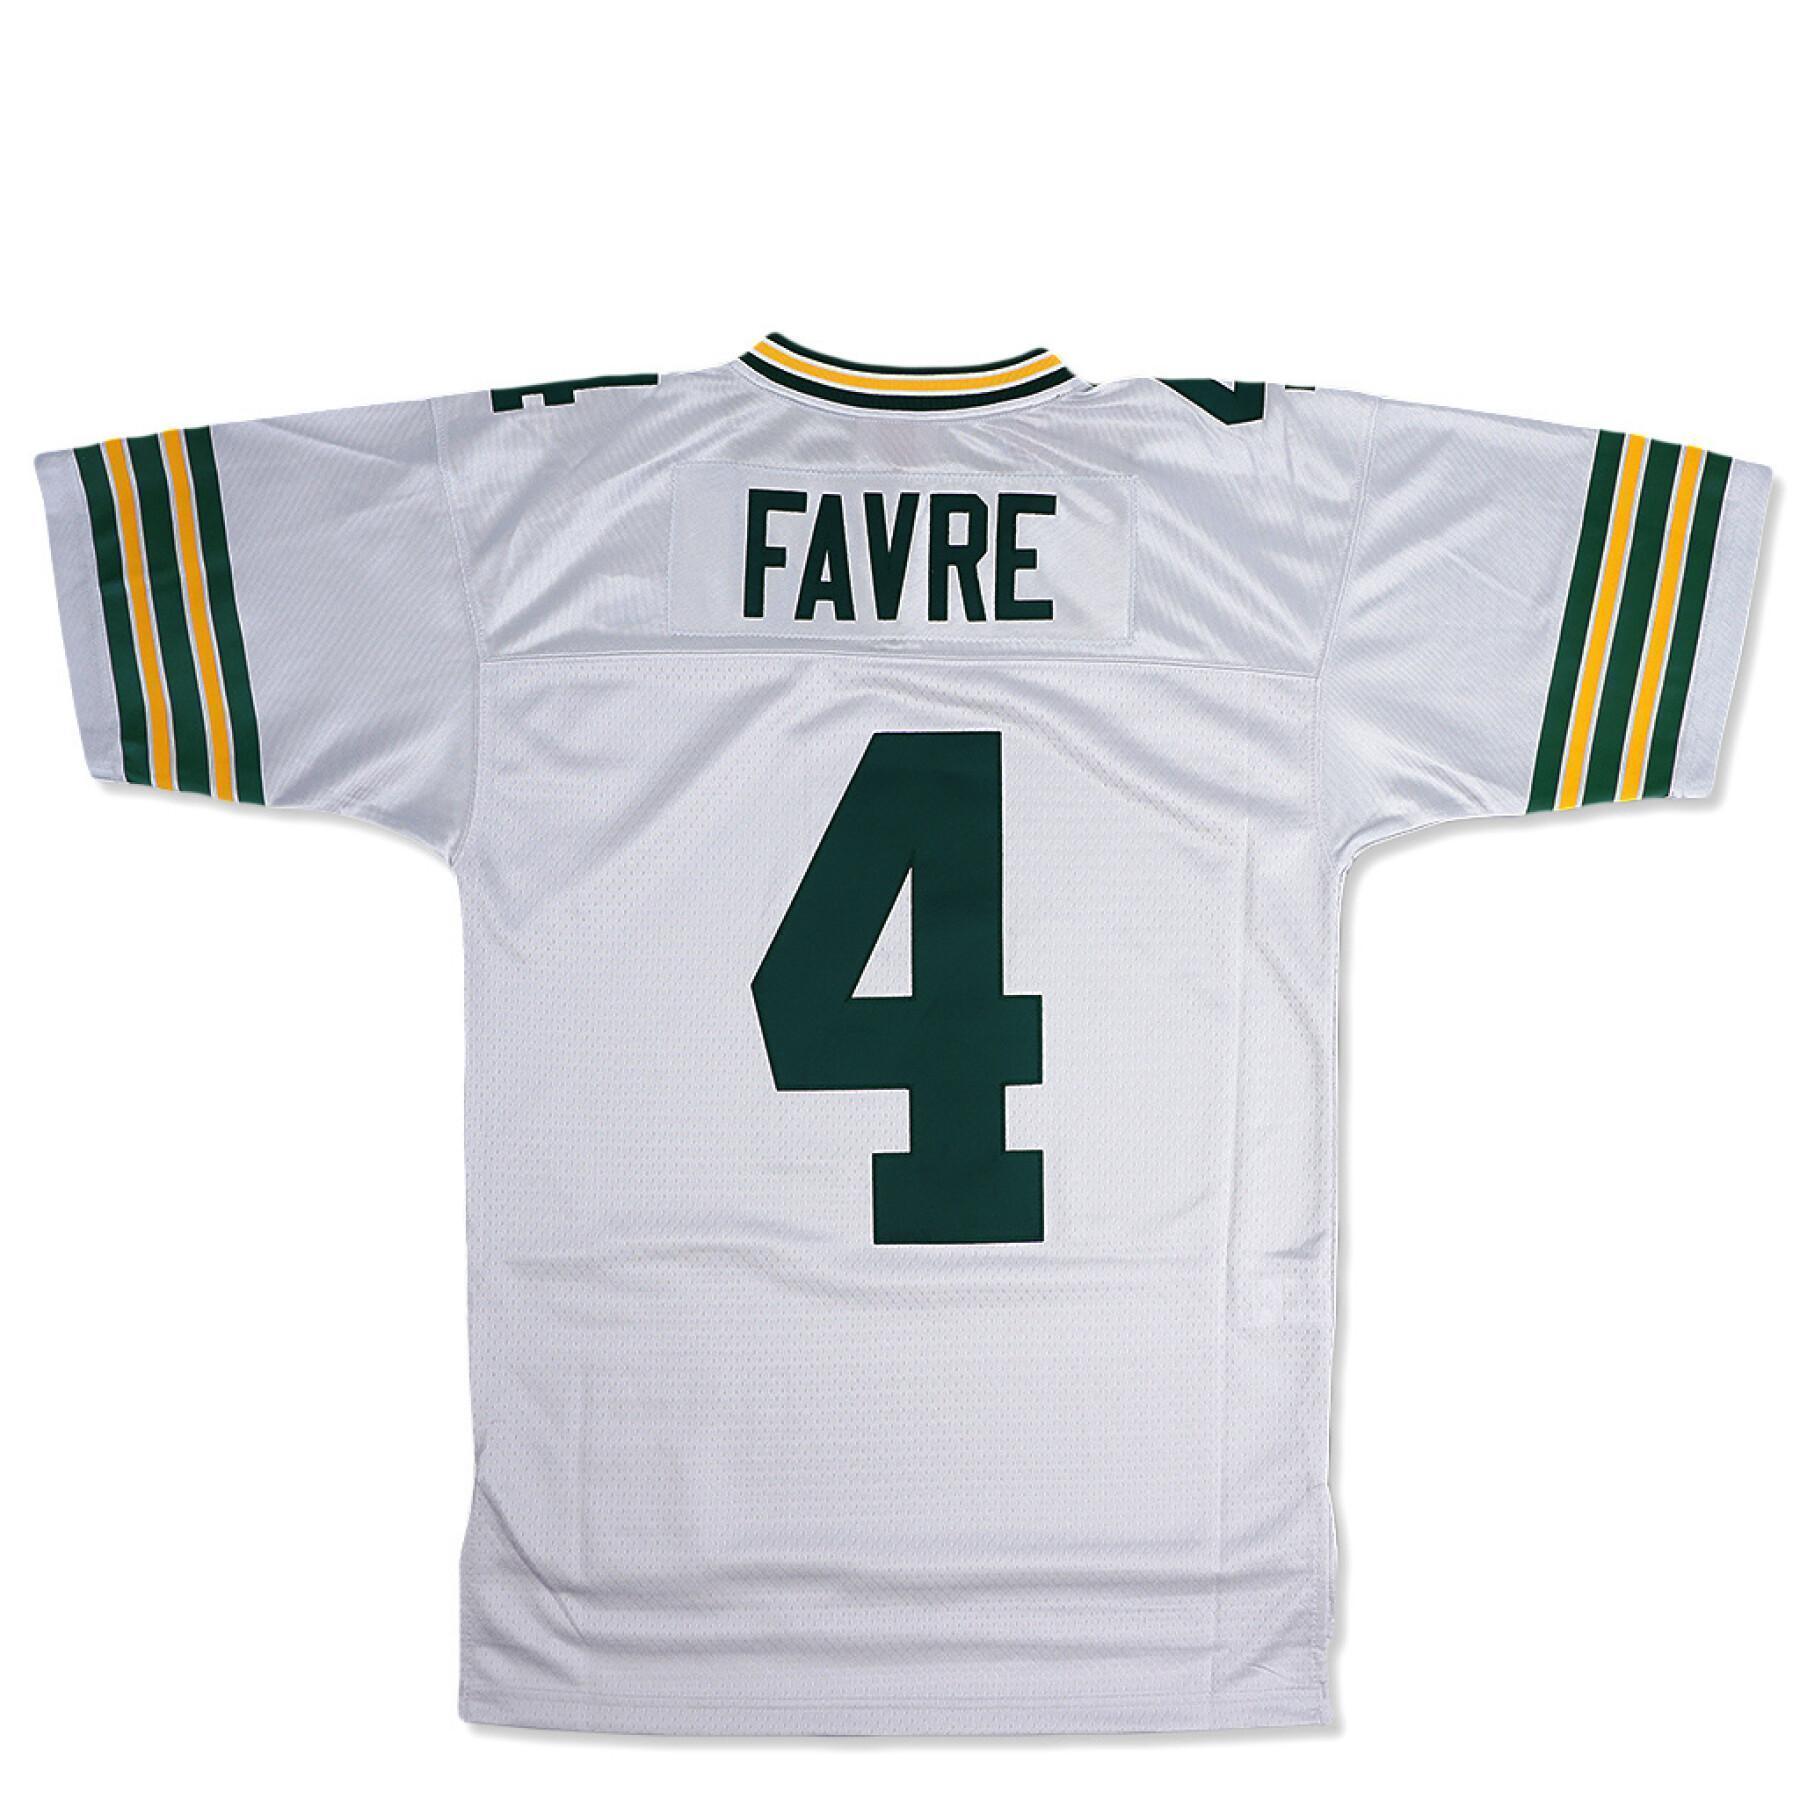 Camisola vindima Green Bay Packers platinum Brett Favre